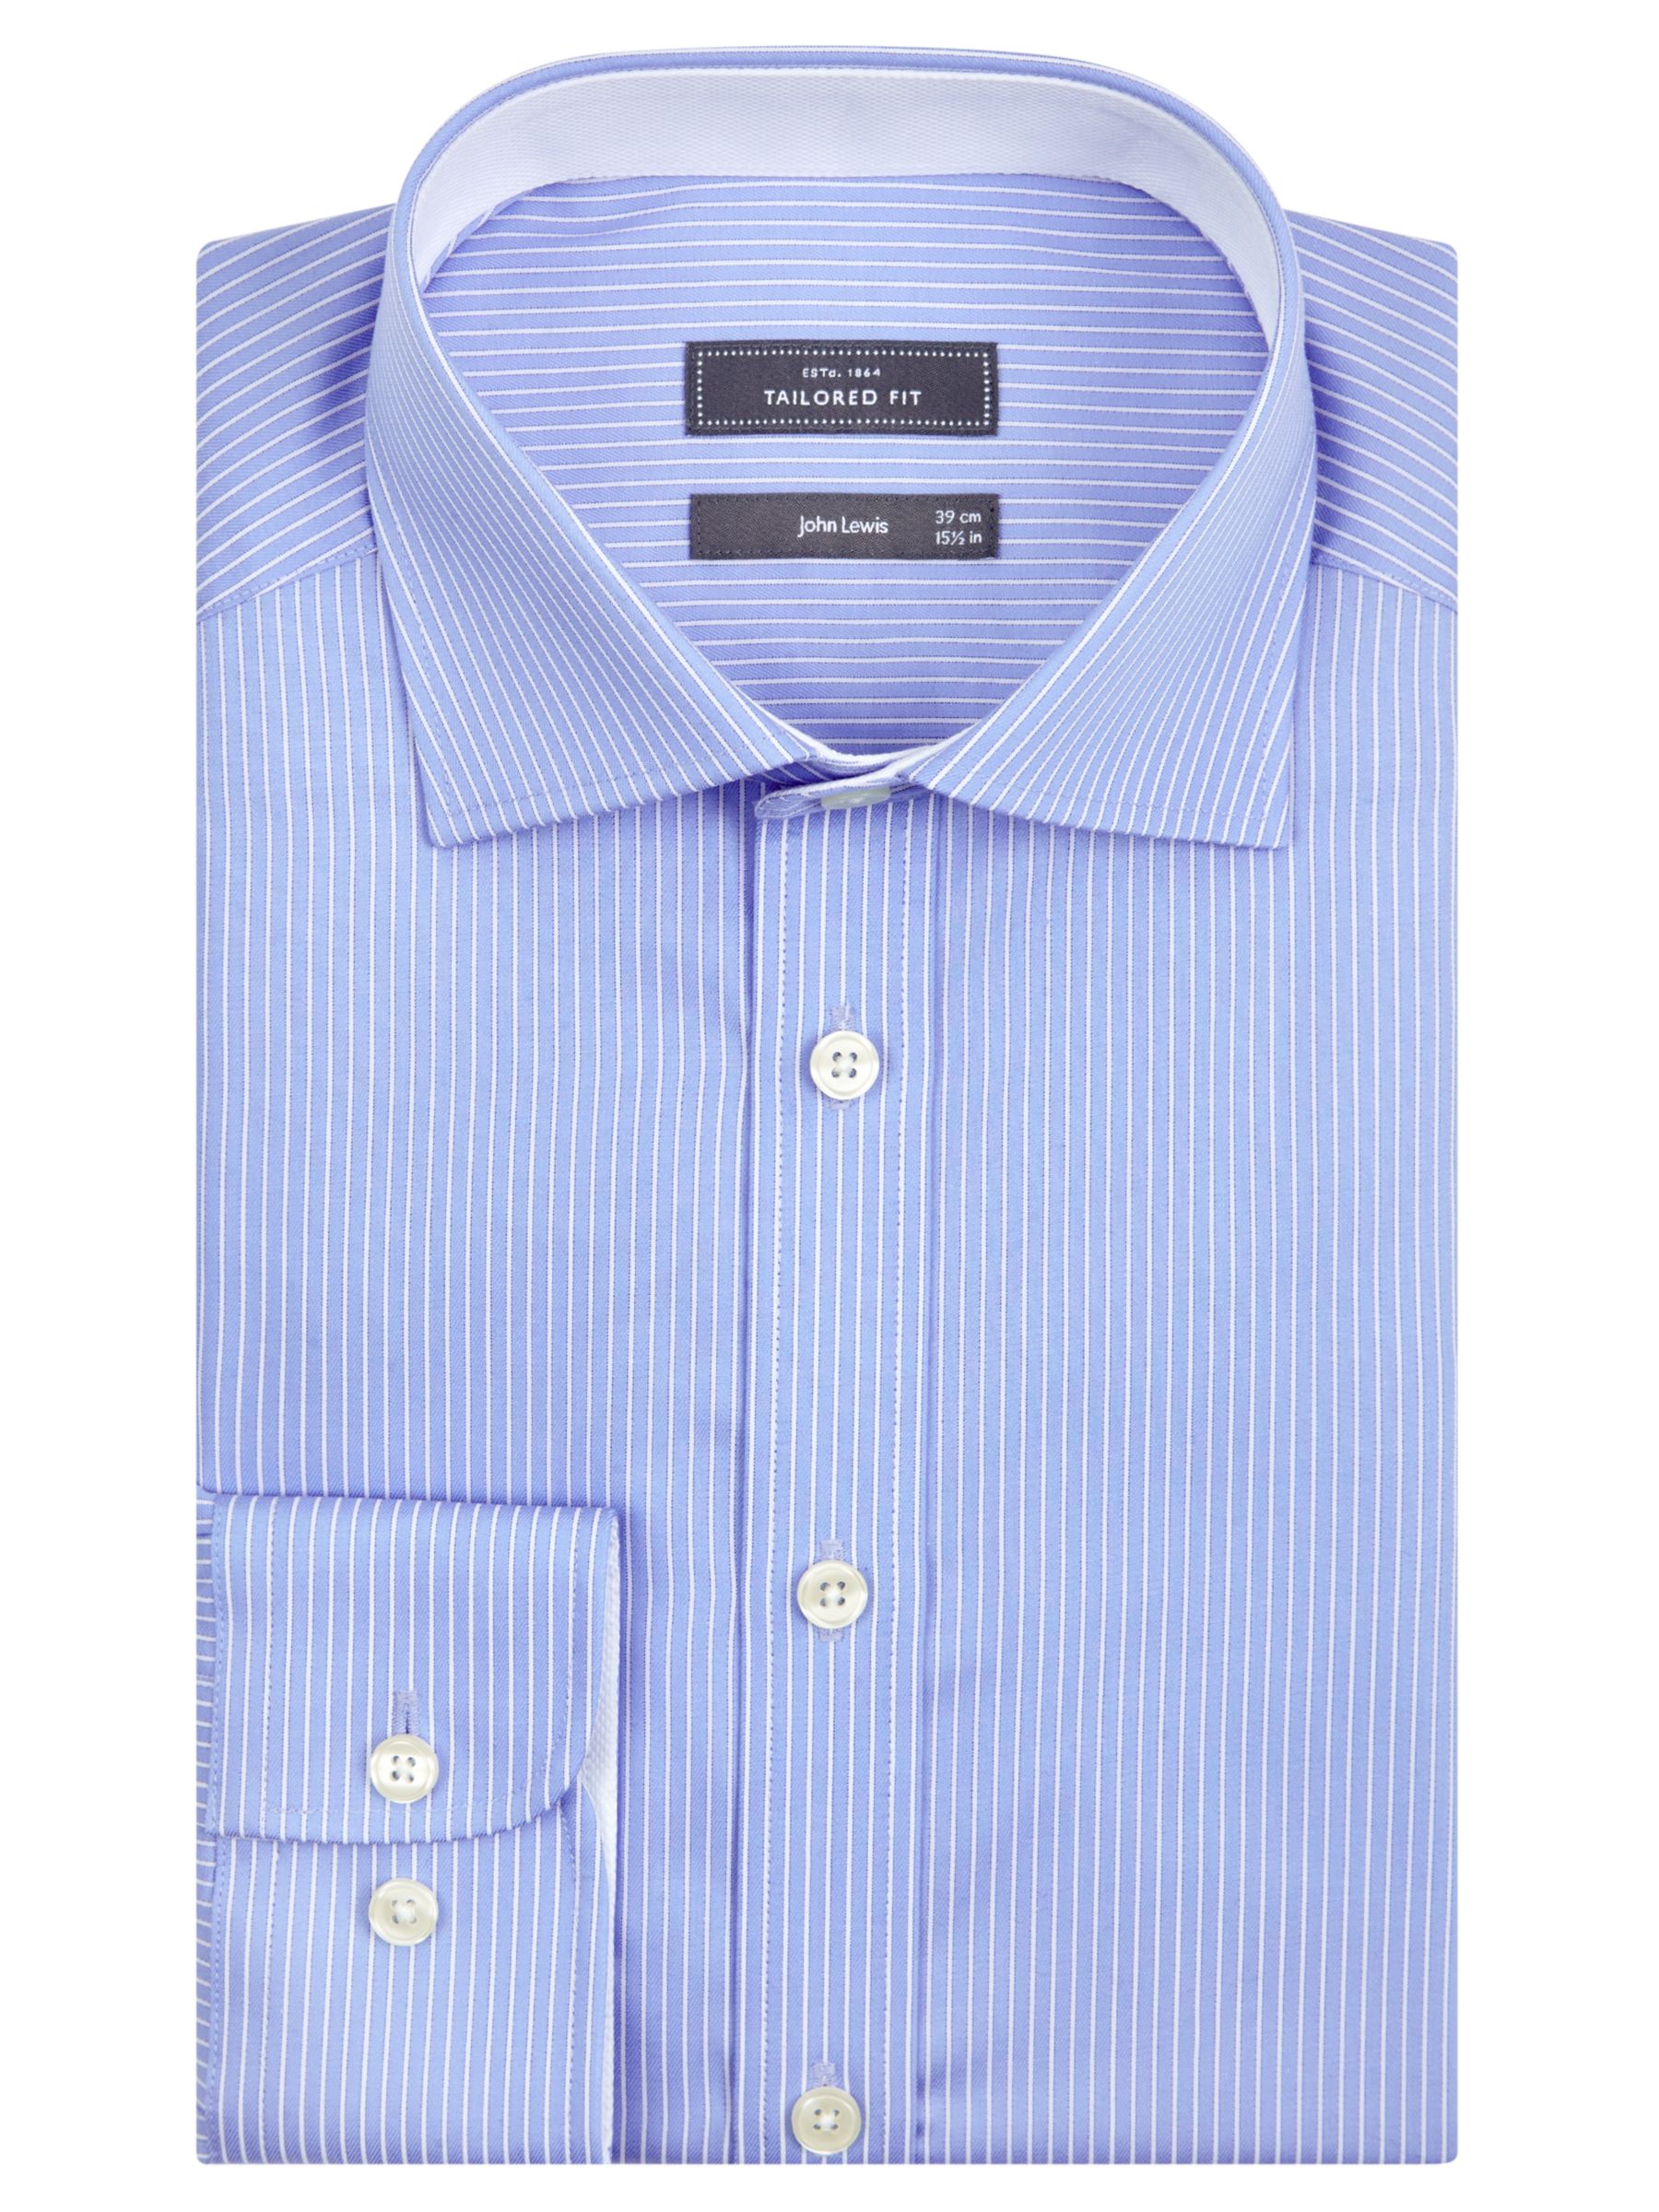 John Lewis & Partners Fine Twill Stripe Tailored Fit Shirt, Blue